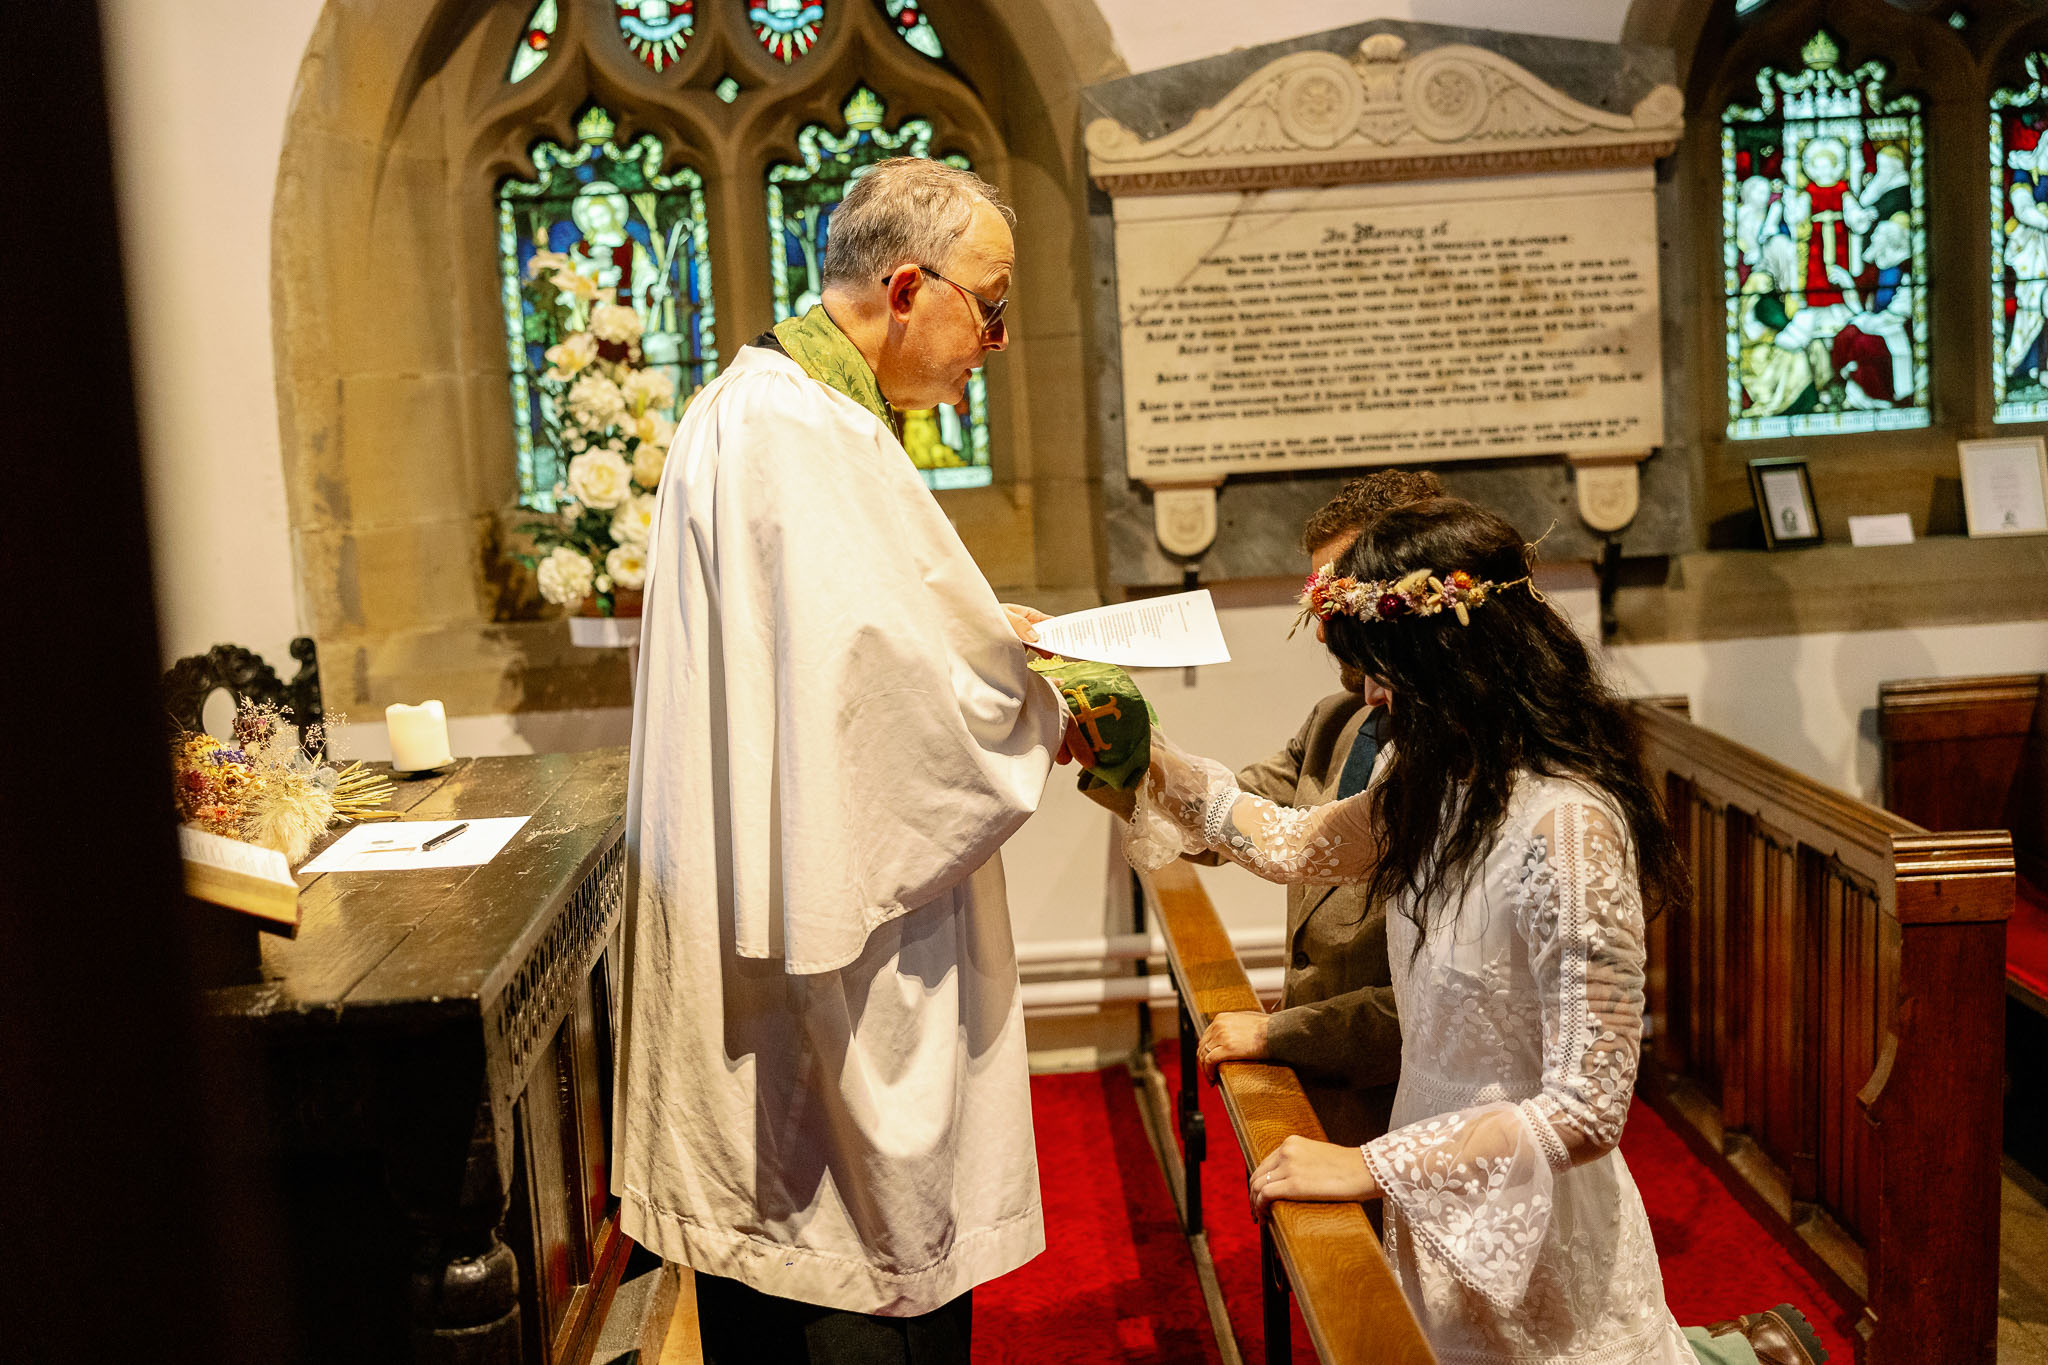 Getting married at Haworth Church 